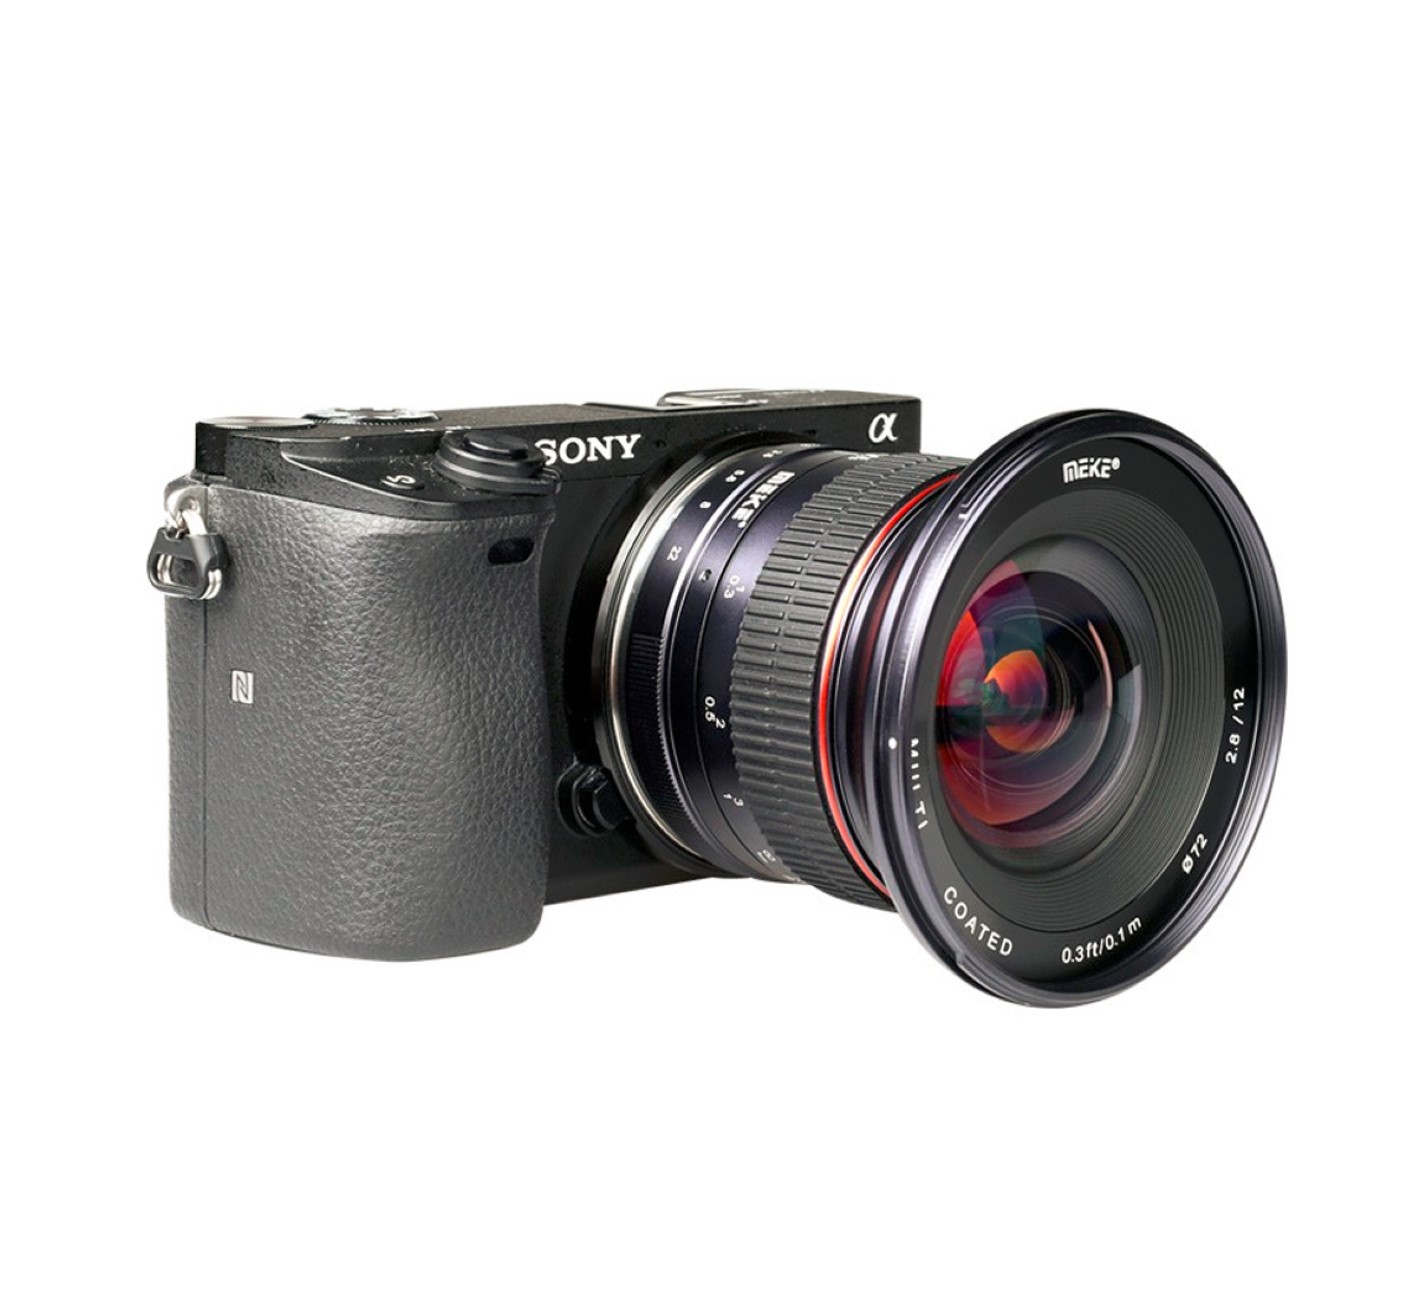 Ultra-Weitwinkelobjektiv MK-12mm-F/2.8 für Fujifilm X-Mount